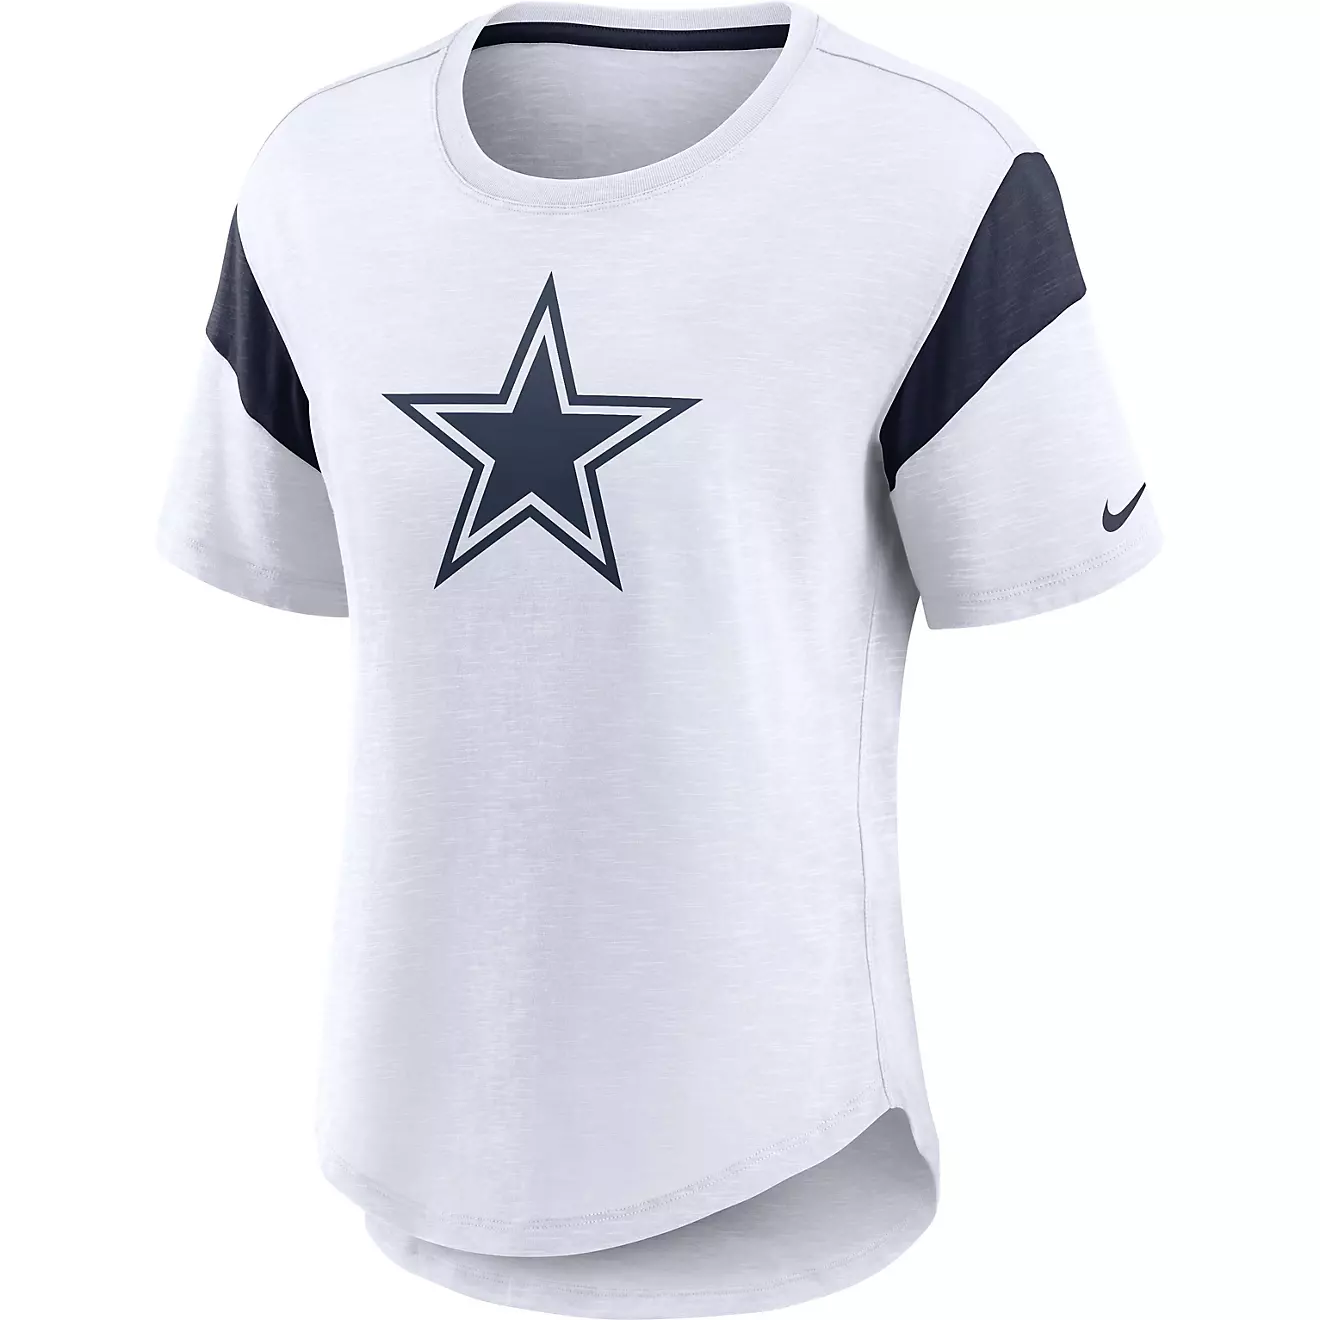 Women's Nike White Dallas Cowboys Fashion Slub Top